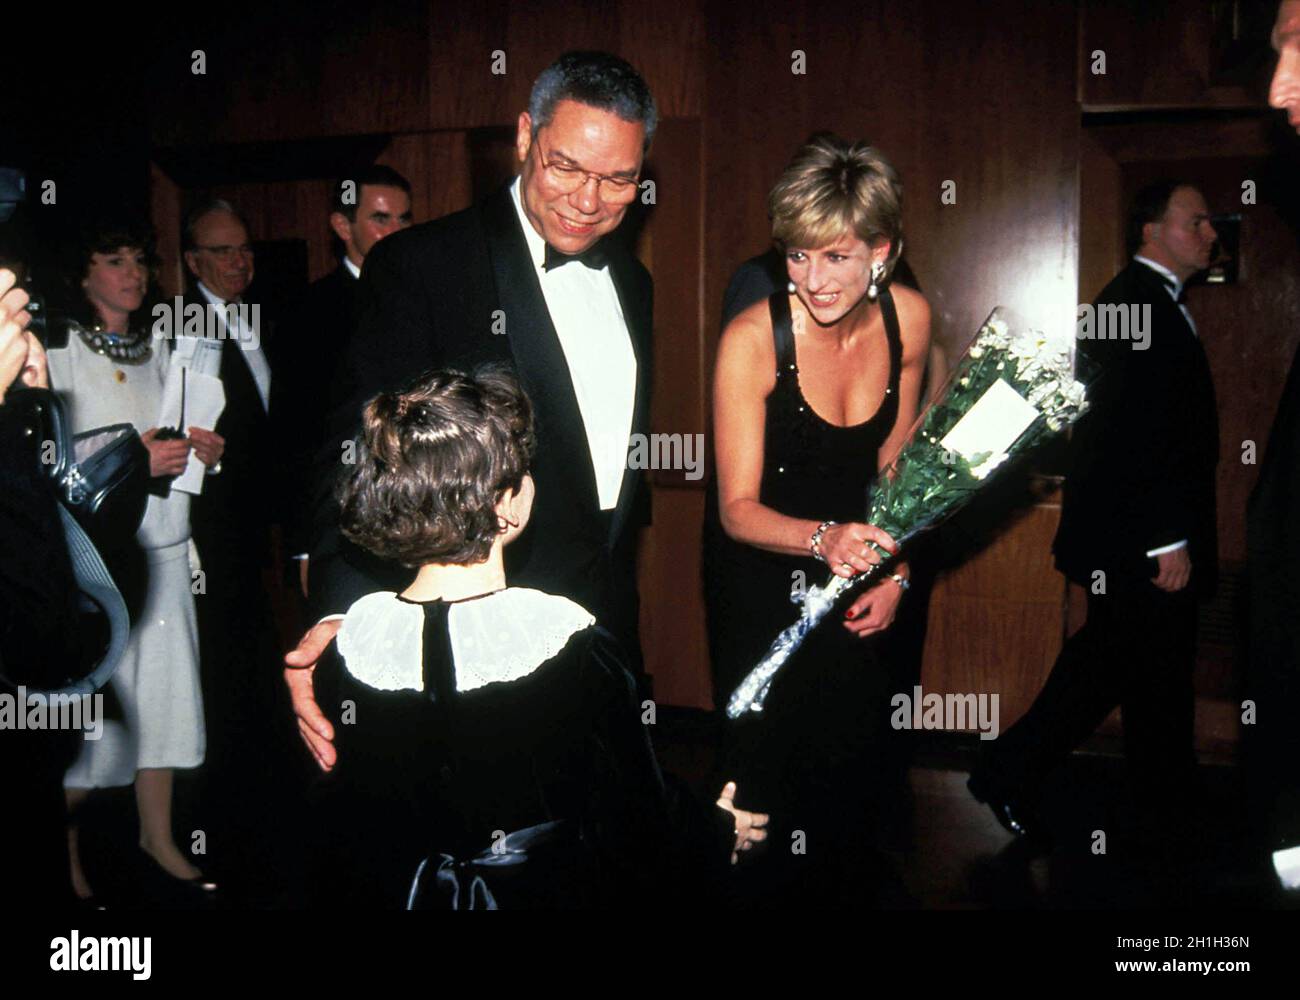 K3395 AR.a reçu le prix de United Cerebral Palsey.Princess Diana et Colin Powell.15 août 2005.ANDREA RENAULT- 1995 crédit: Globe photos/ZUMAPRESS.com/Alamy Live News Banque D'Images